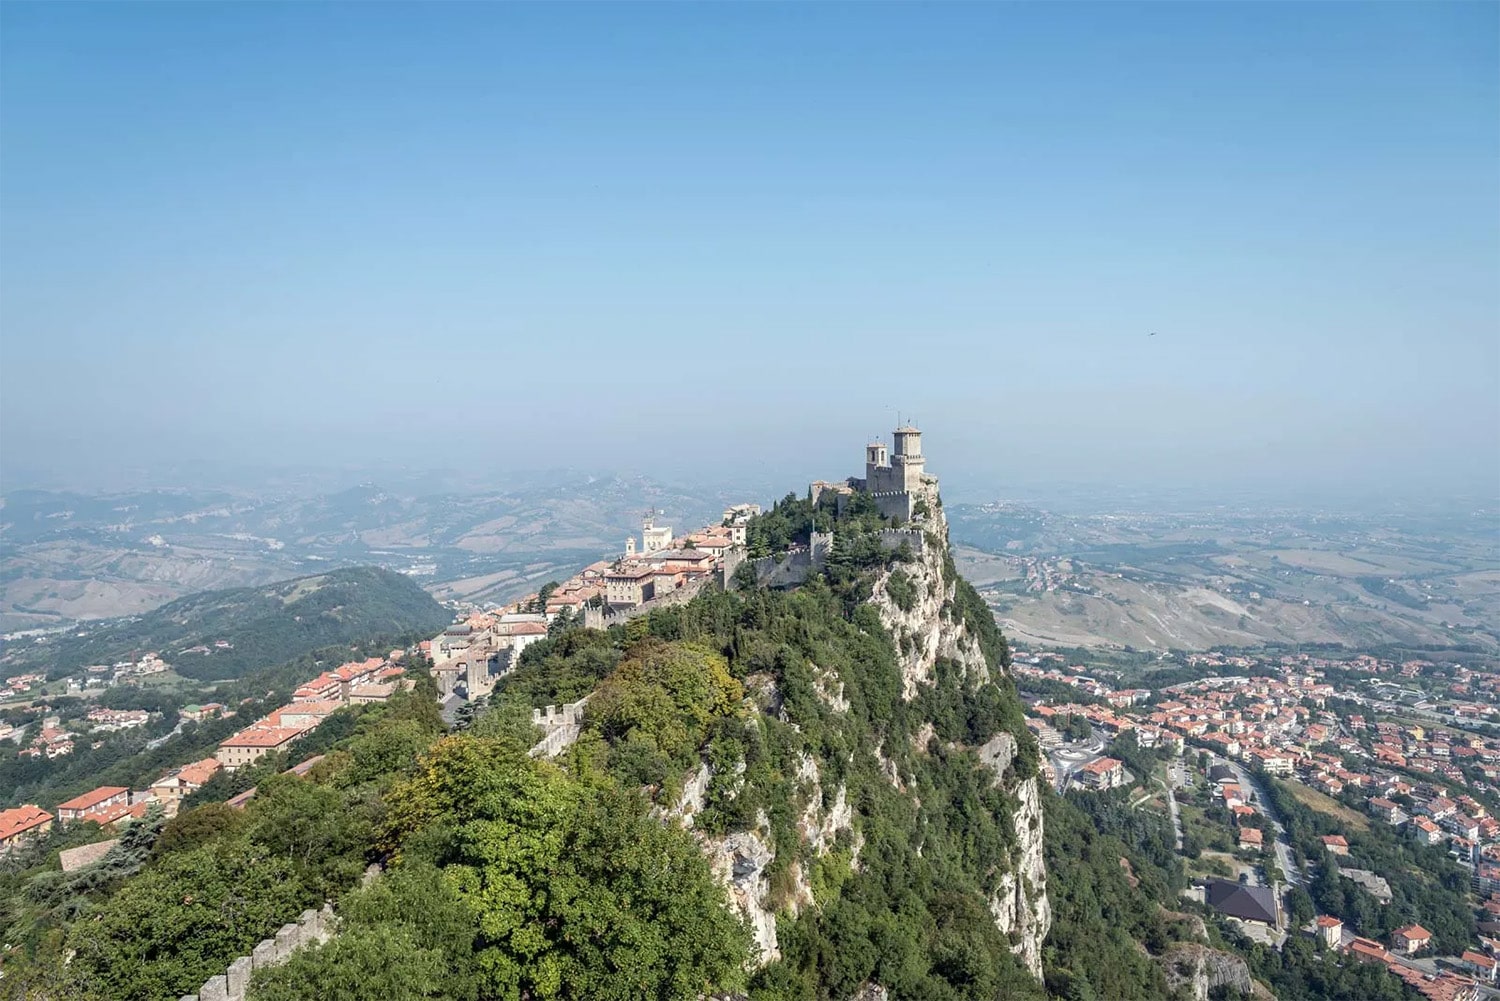 21 interesting facts about San Marino